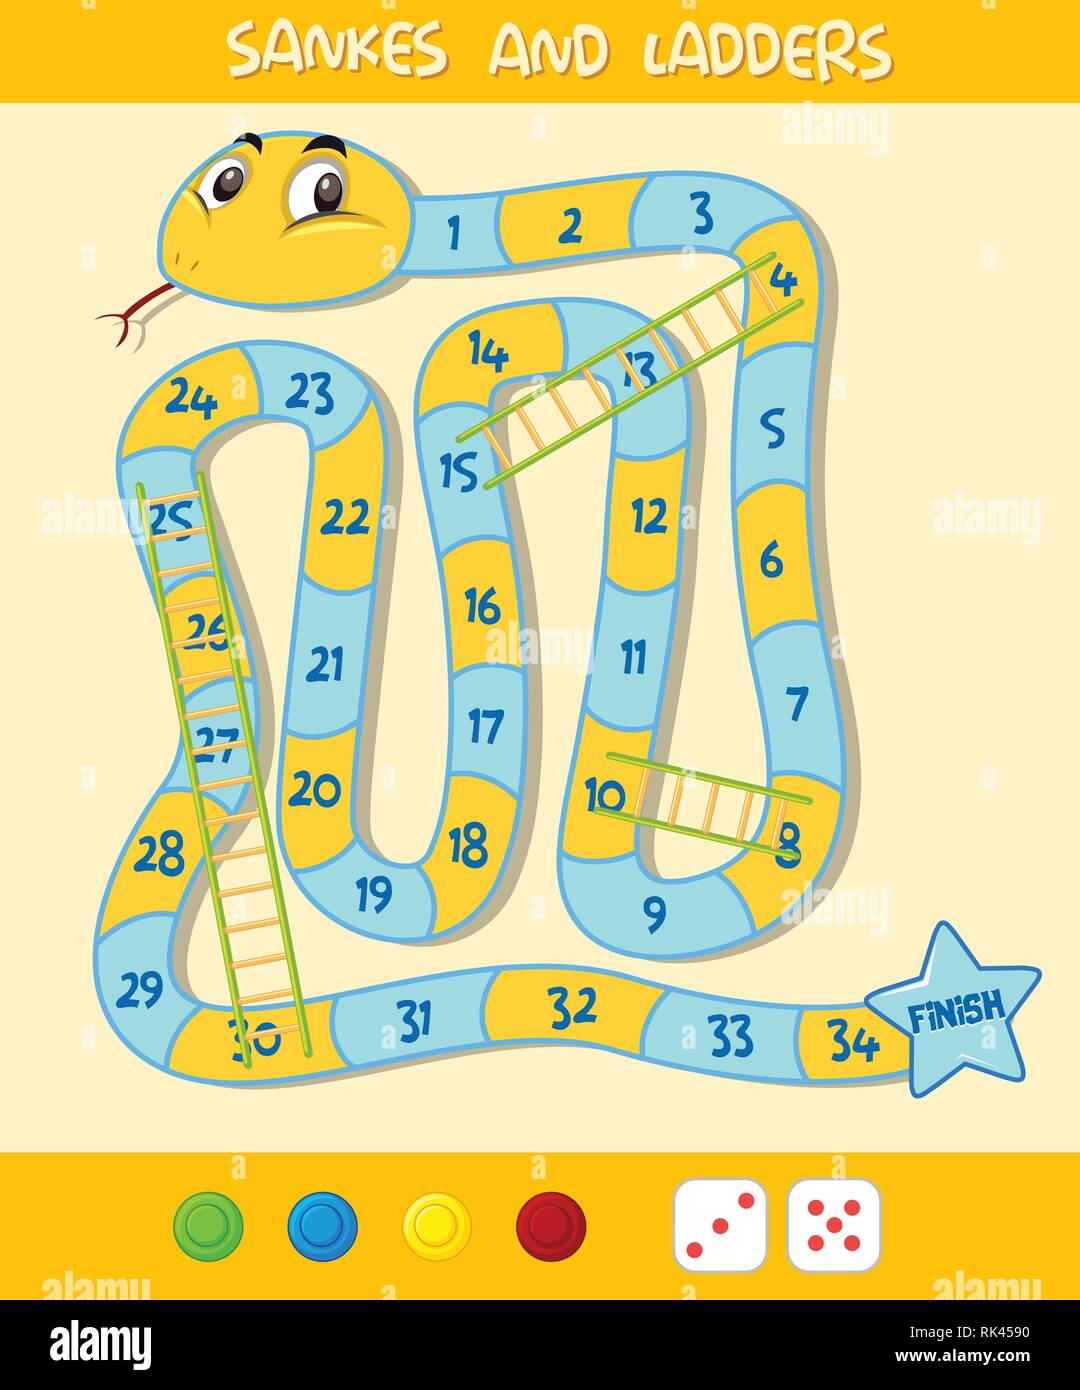 a-snake-ladder-game-template-illustration-stock-vector-image-art-alamy